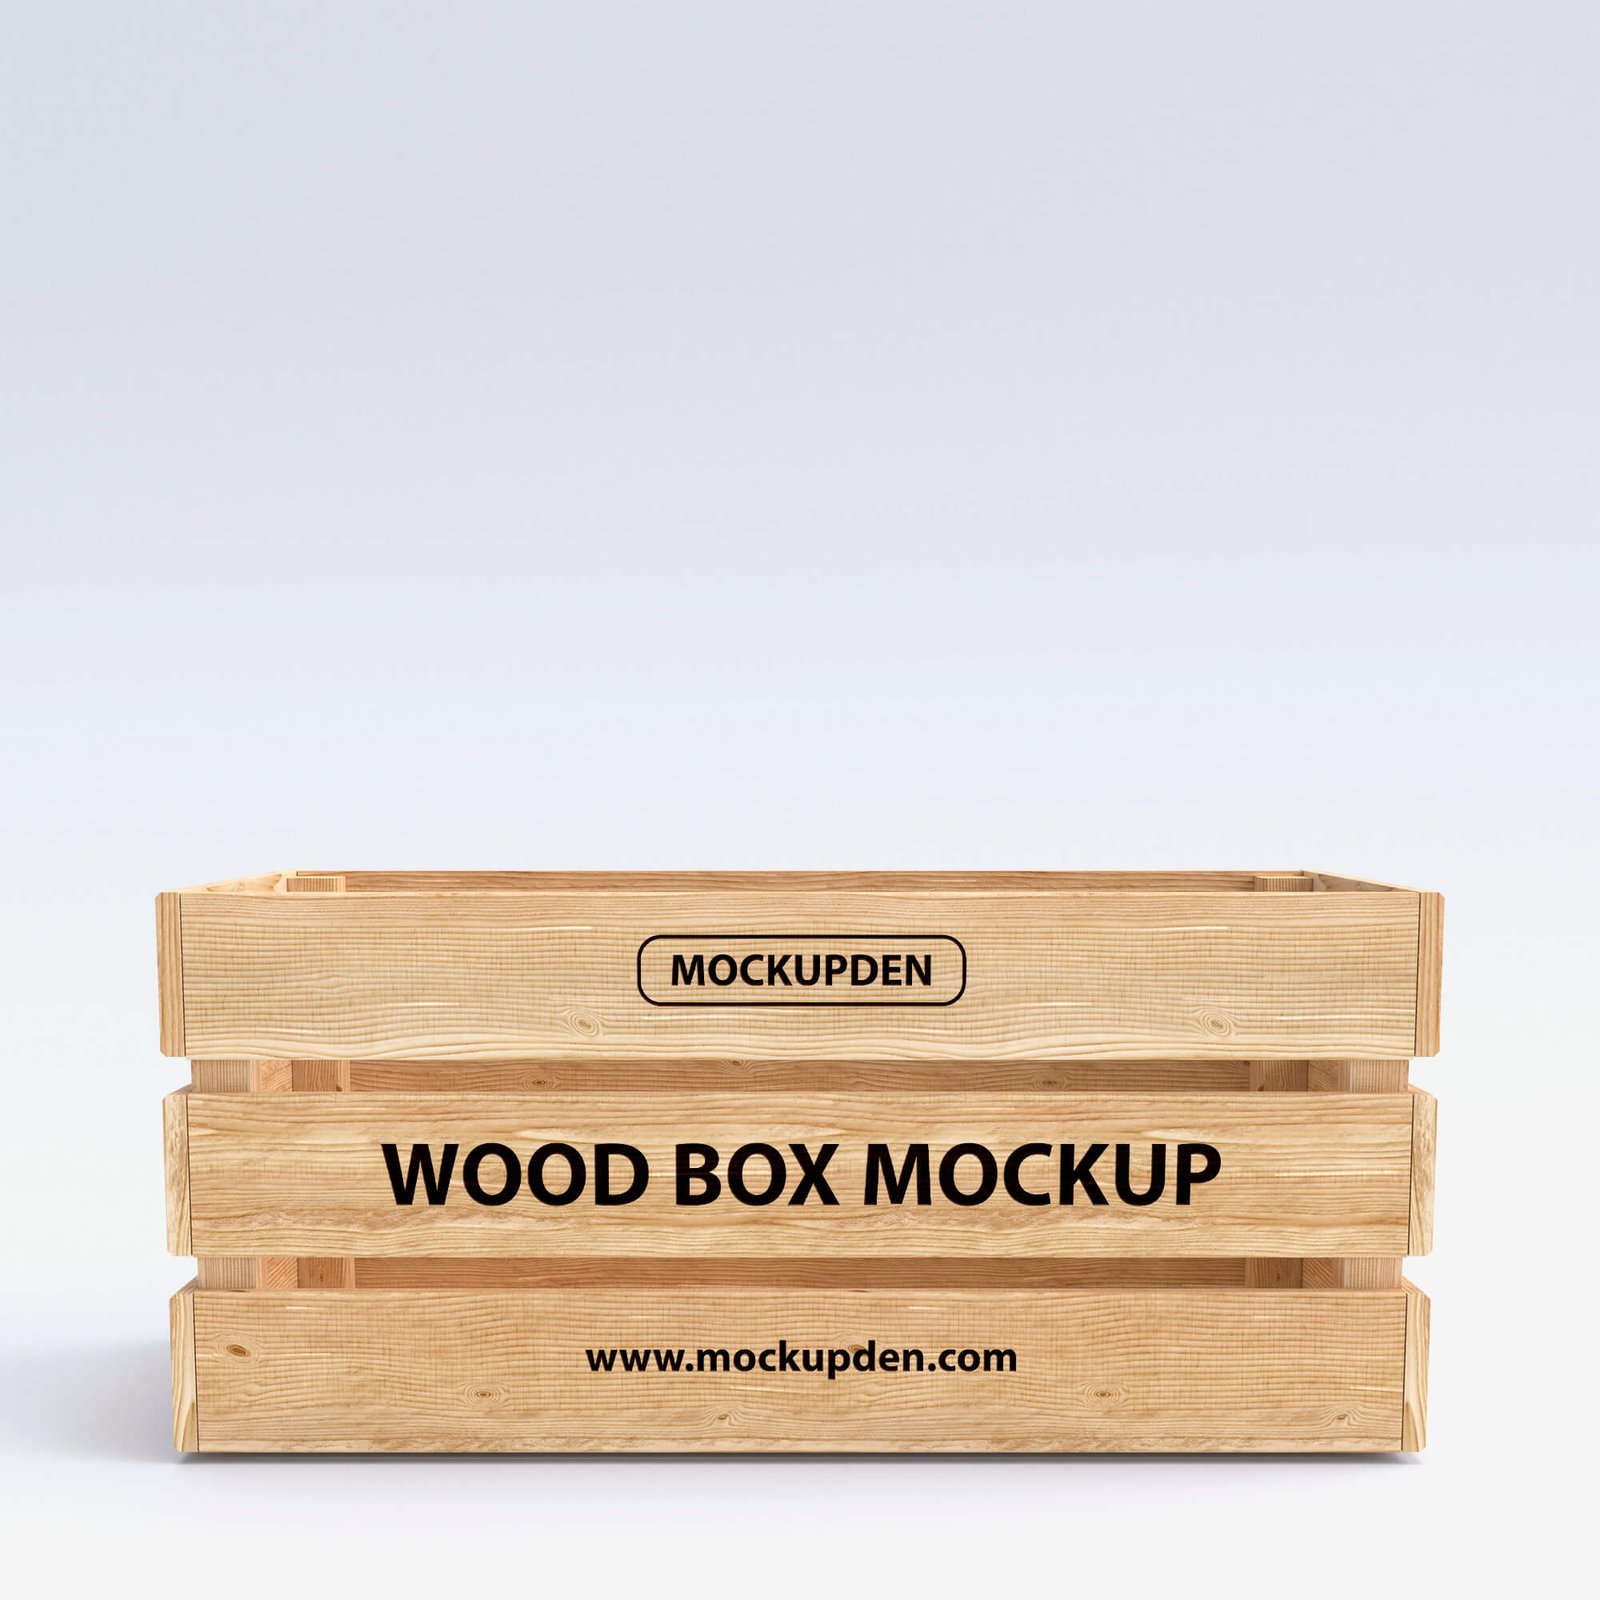 Design Free Wood Box Mockup PSD Template